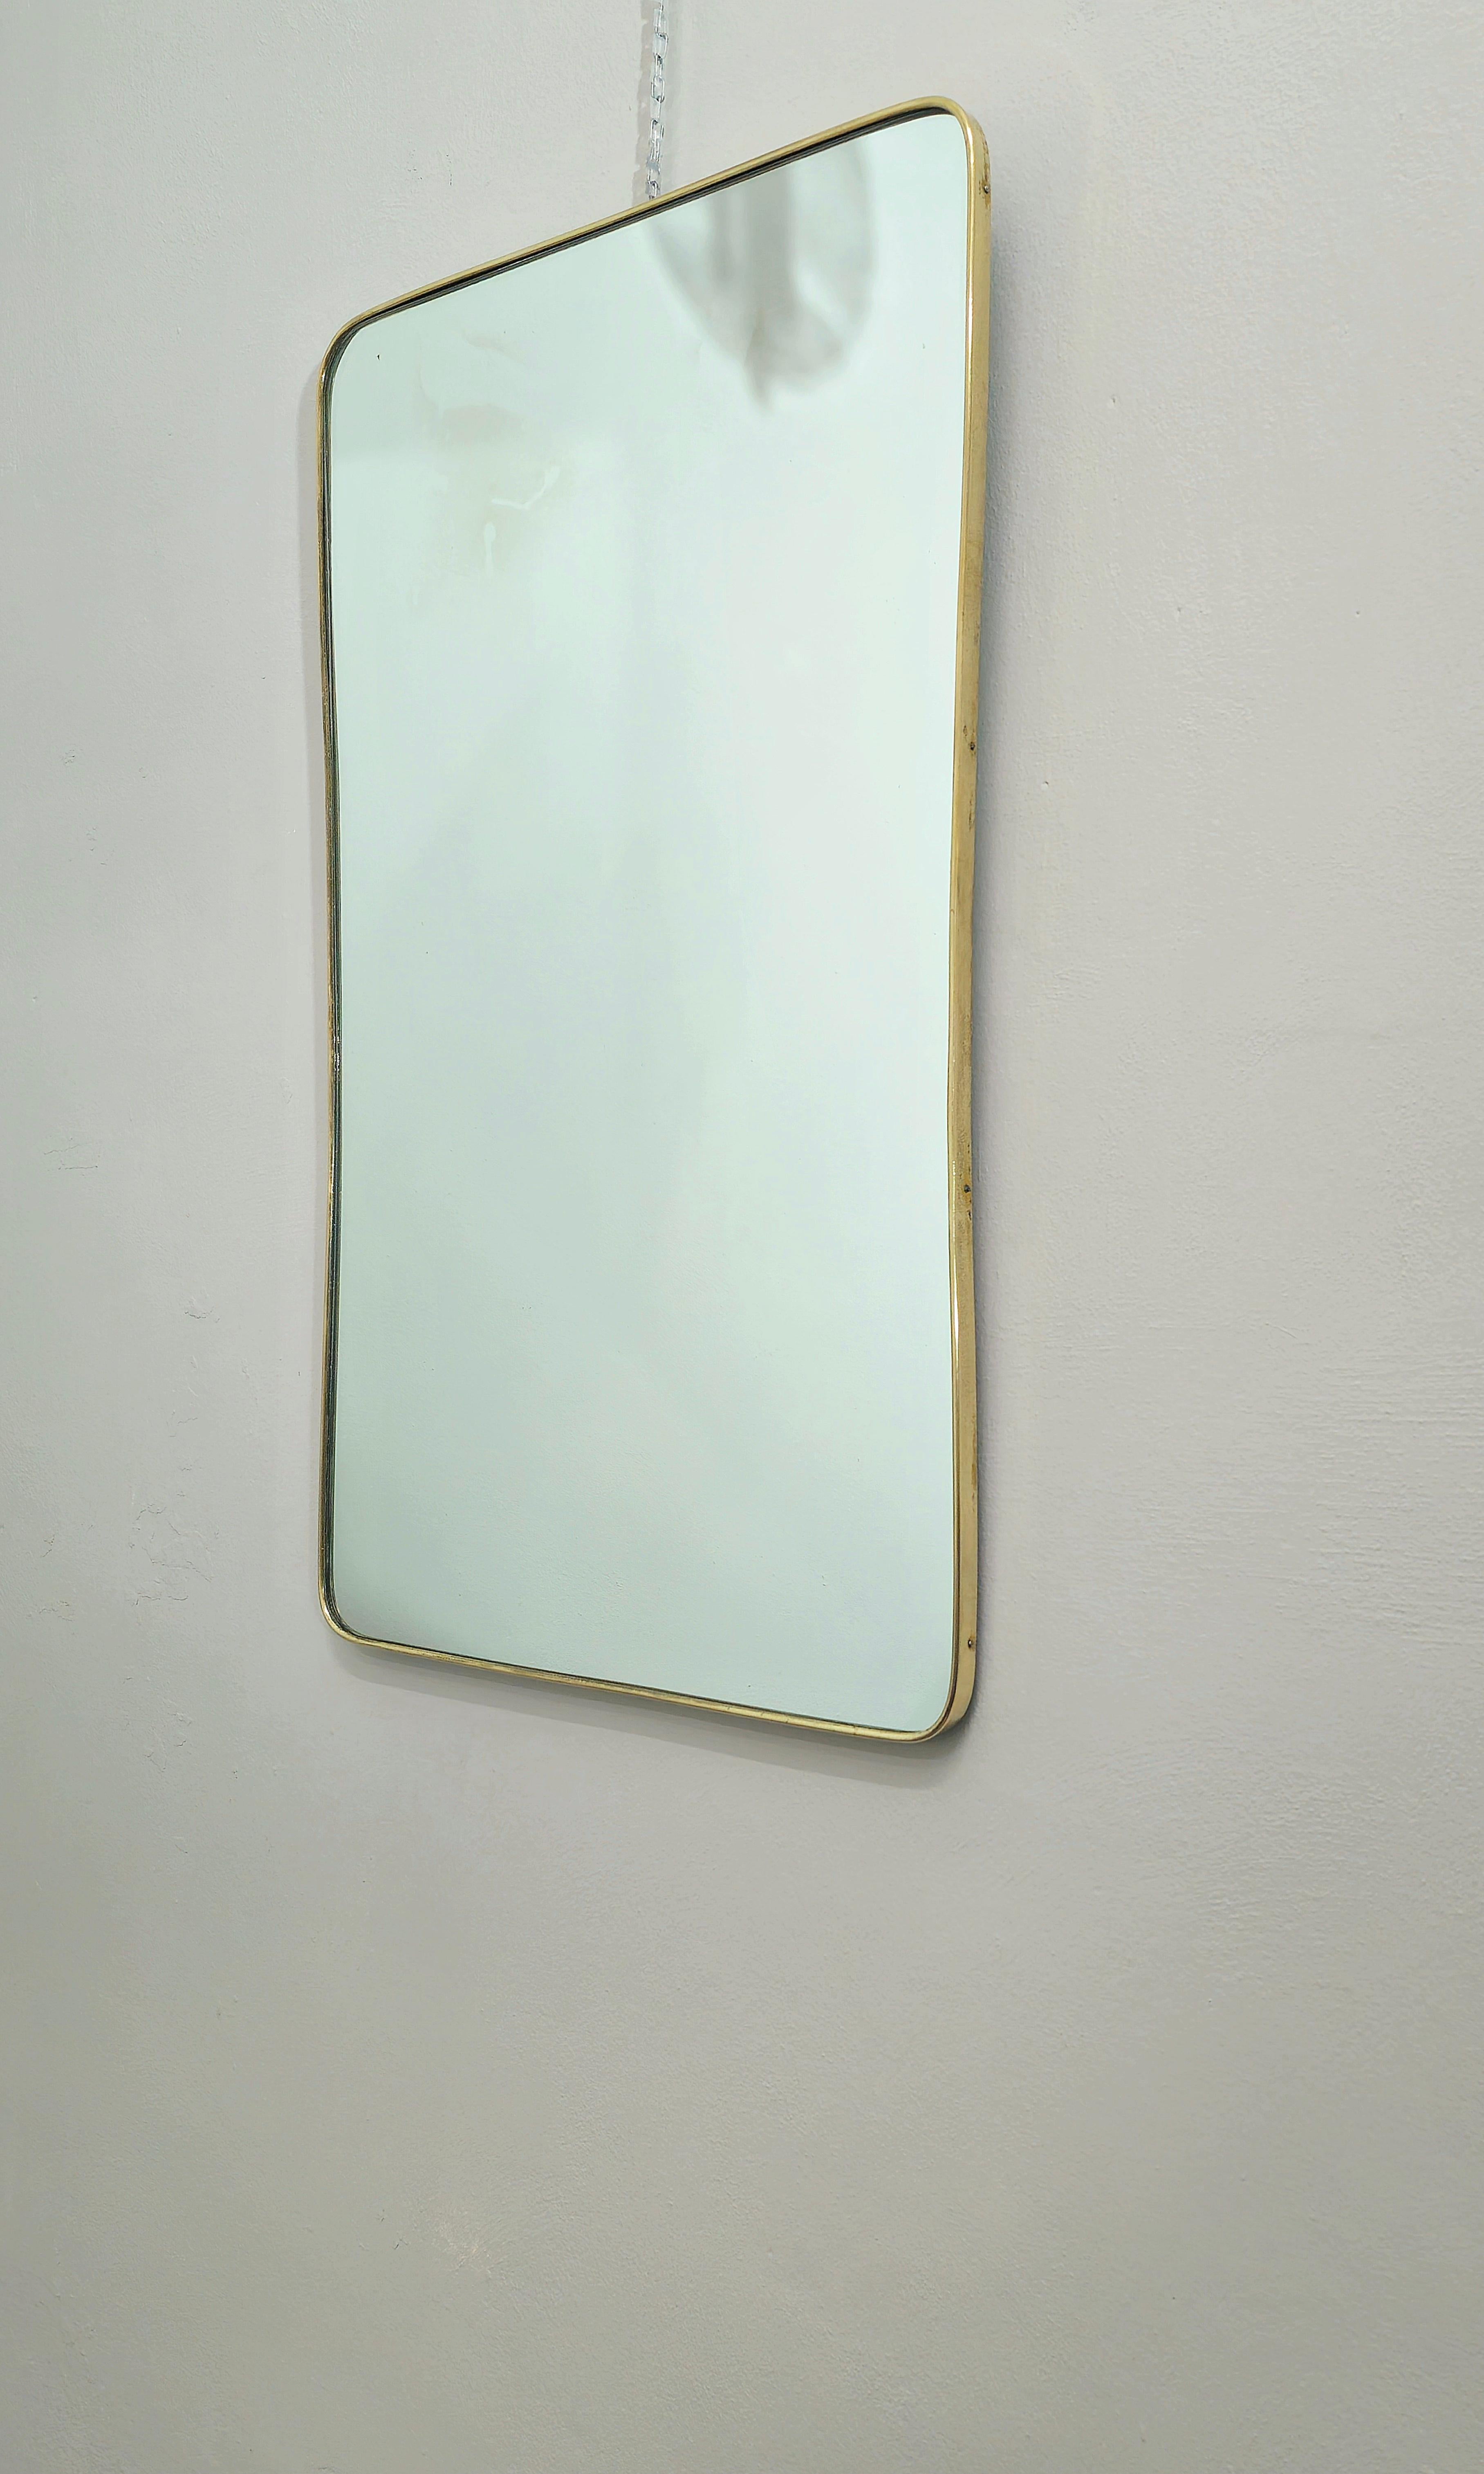 Wall Mirror Brass Attributable to Gio Ponti Midcentury Modern Italian Design 50s 2